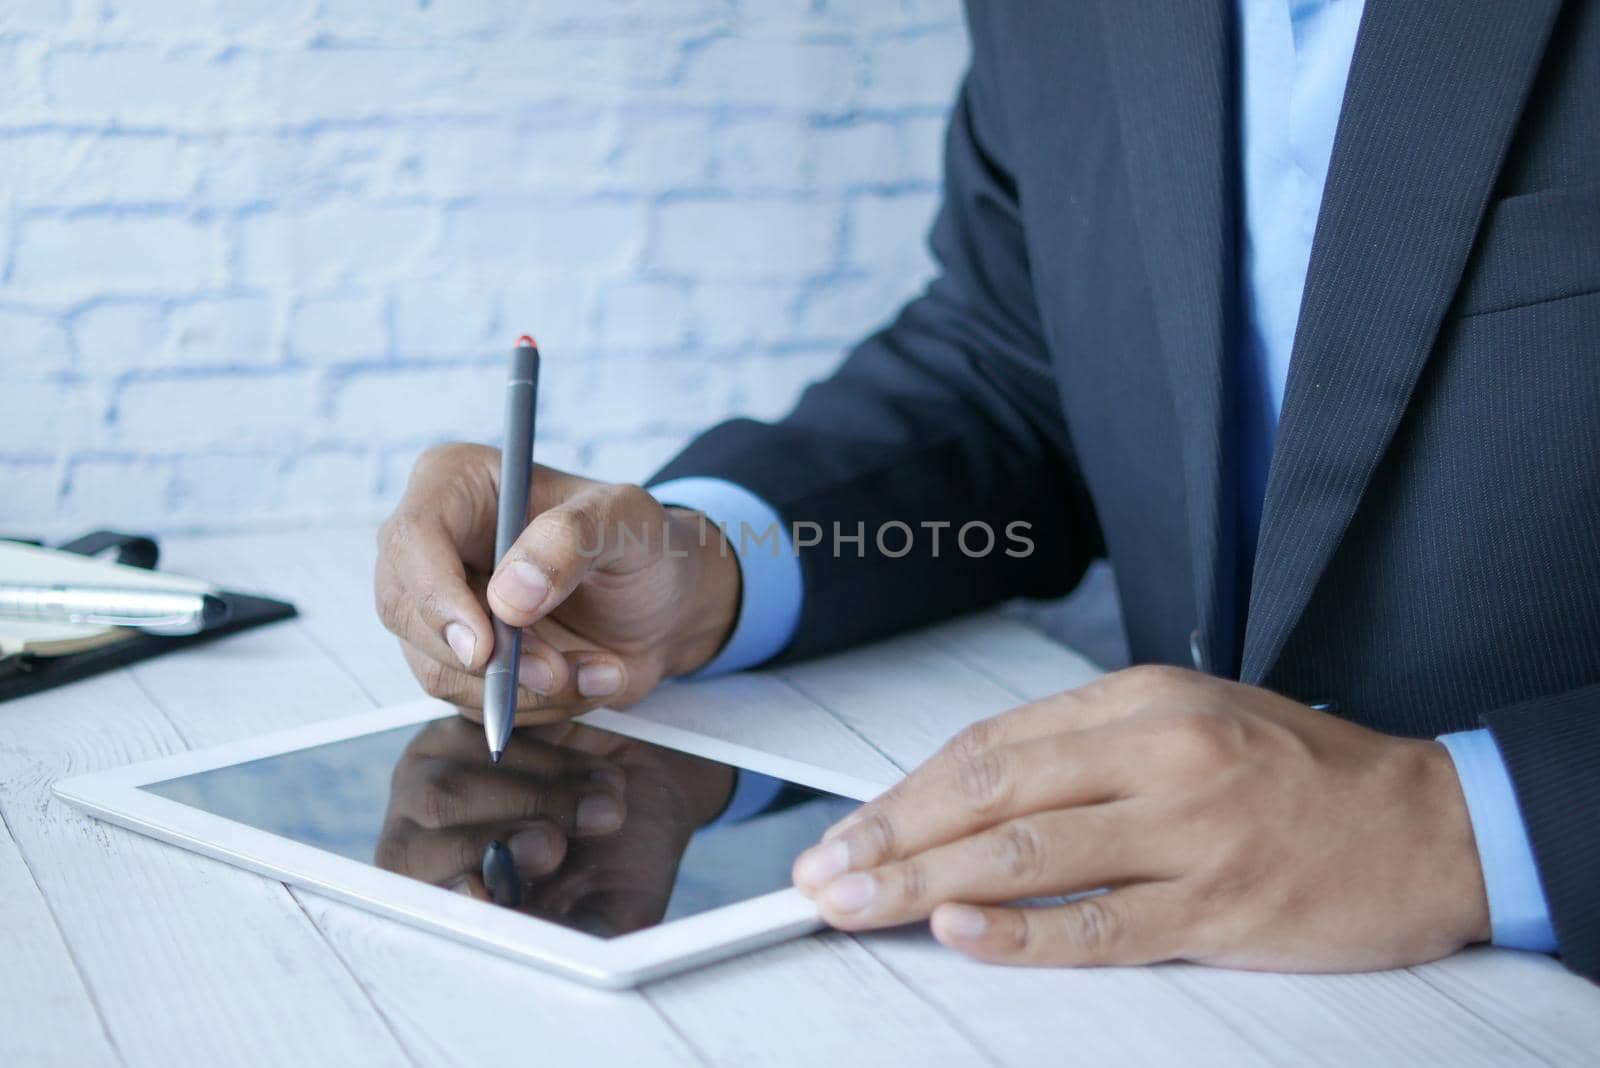 man's hand working on digital tablet at office desk